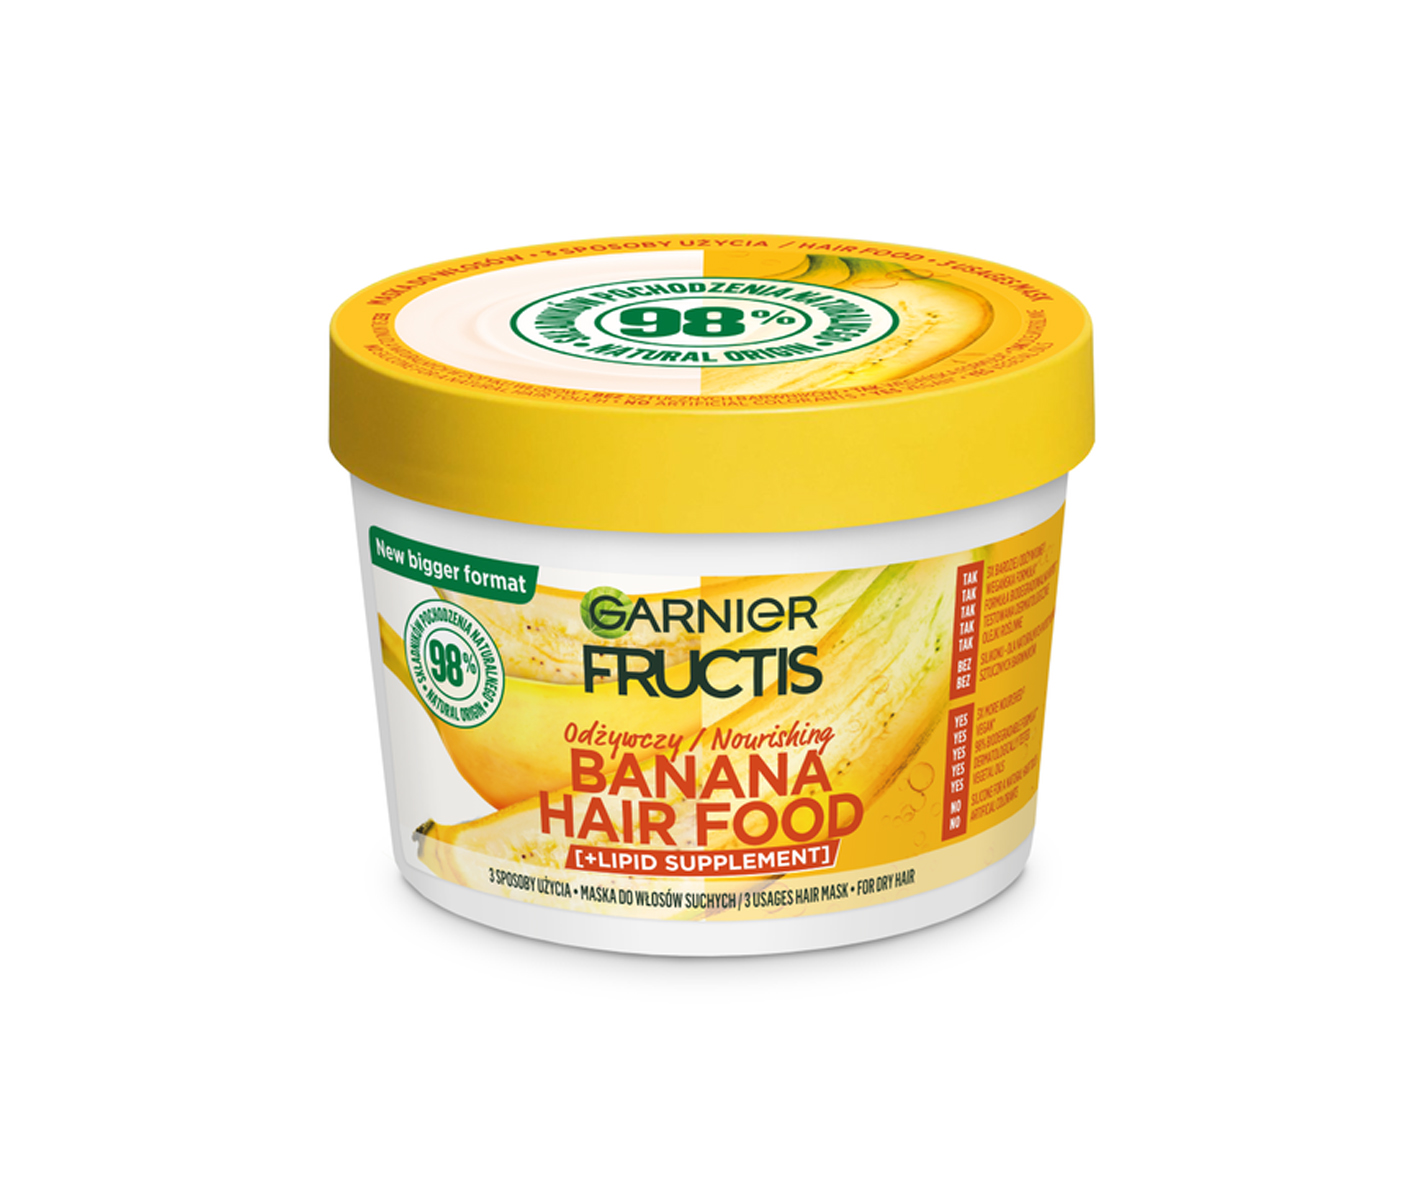 Garnier Fructis, Hair Food Banana, maska do włosów suchych